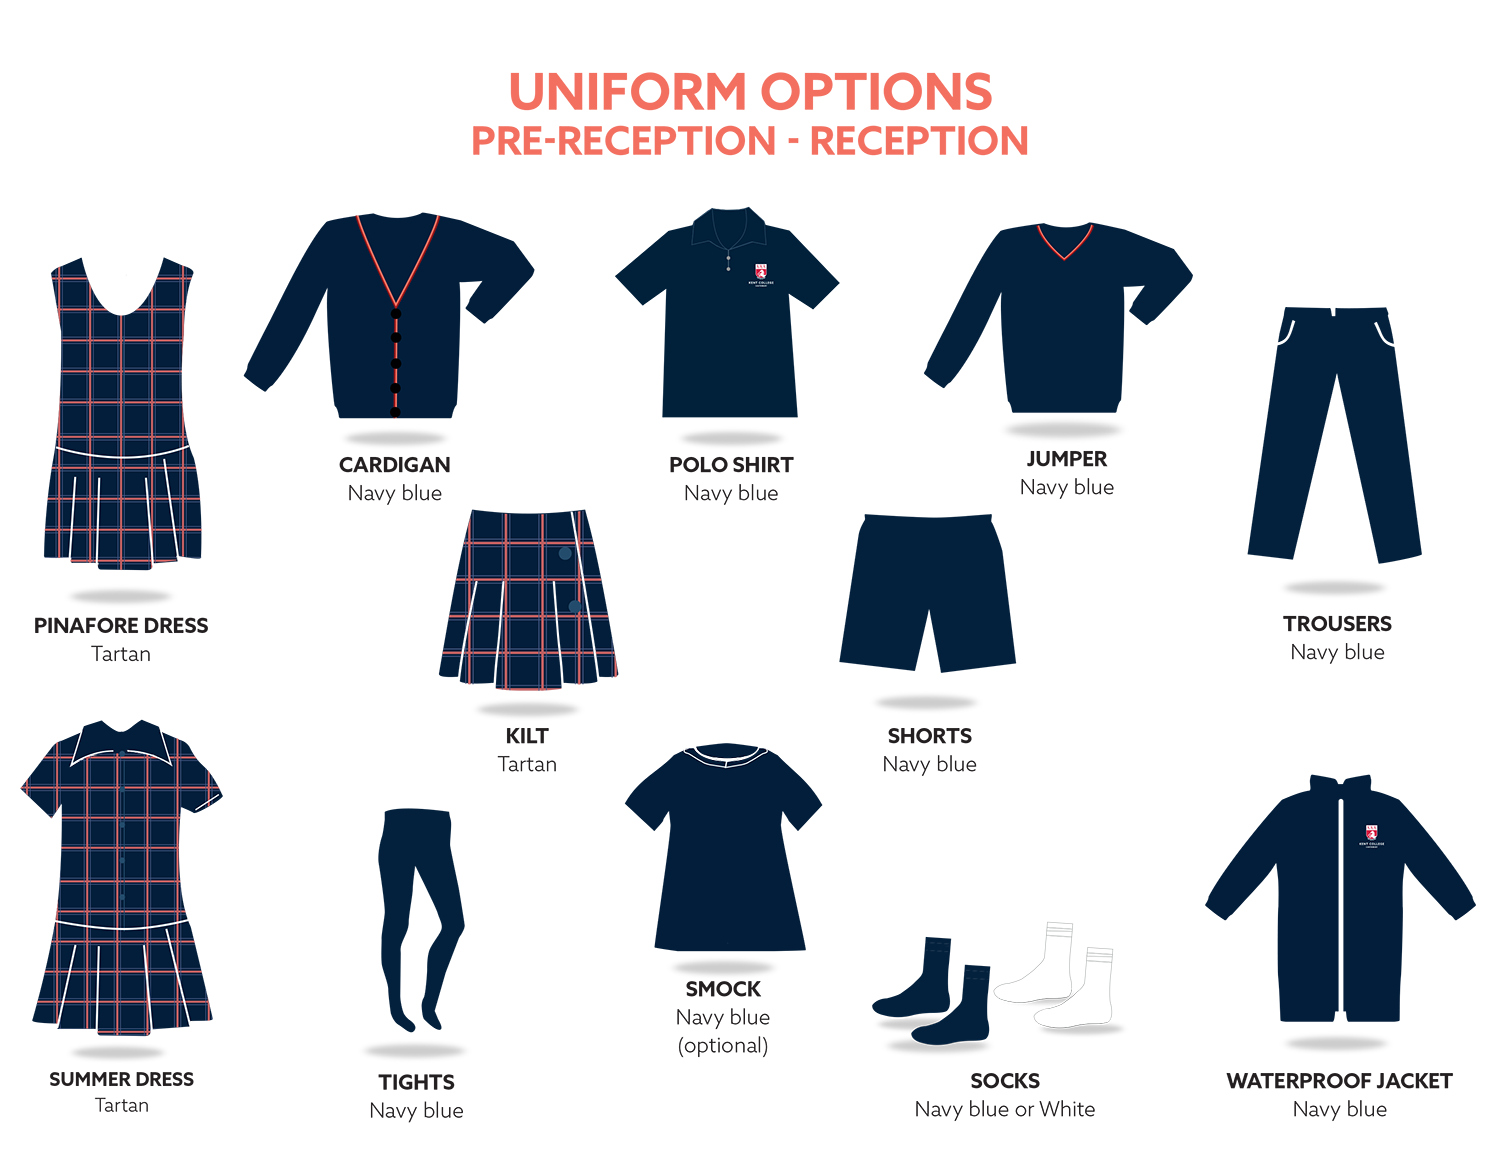 Pre-Reception and Reception Uniform Graphic